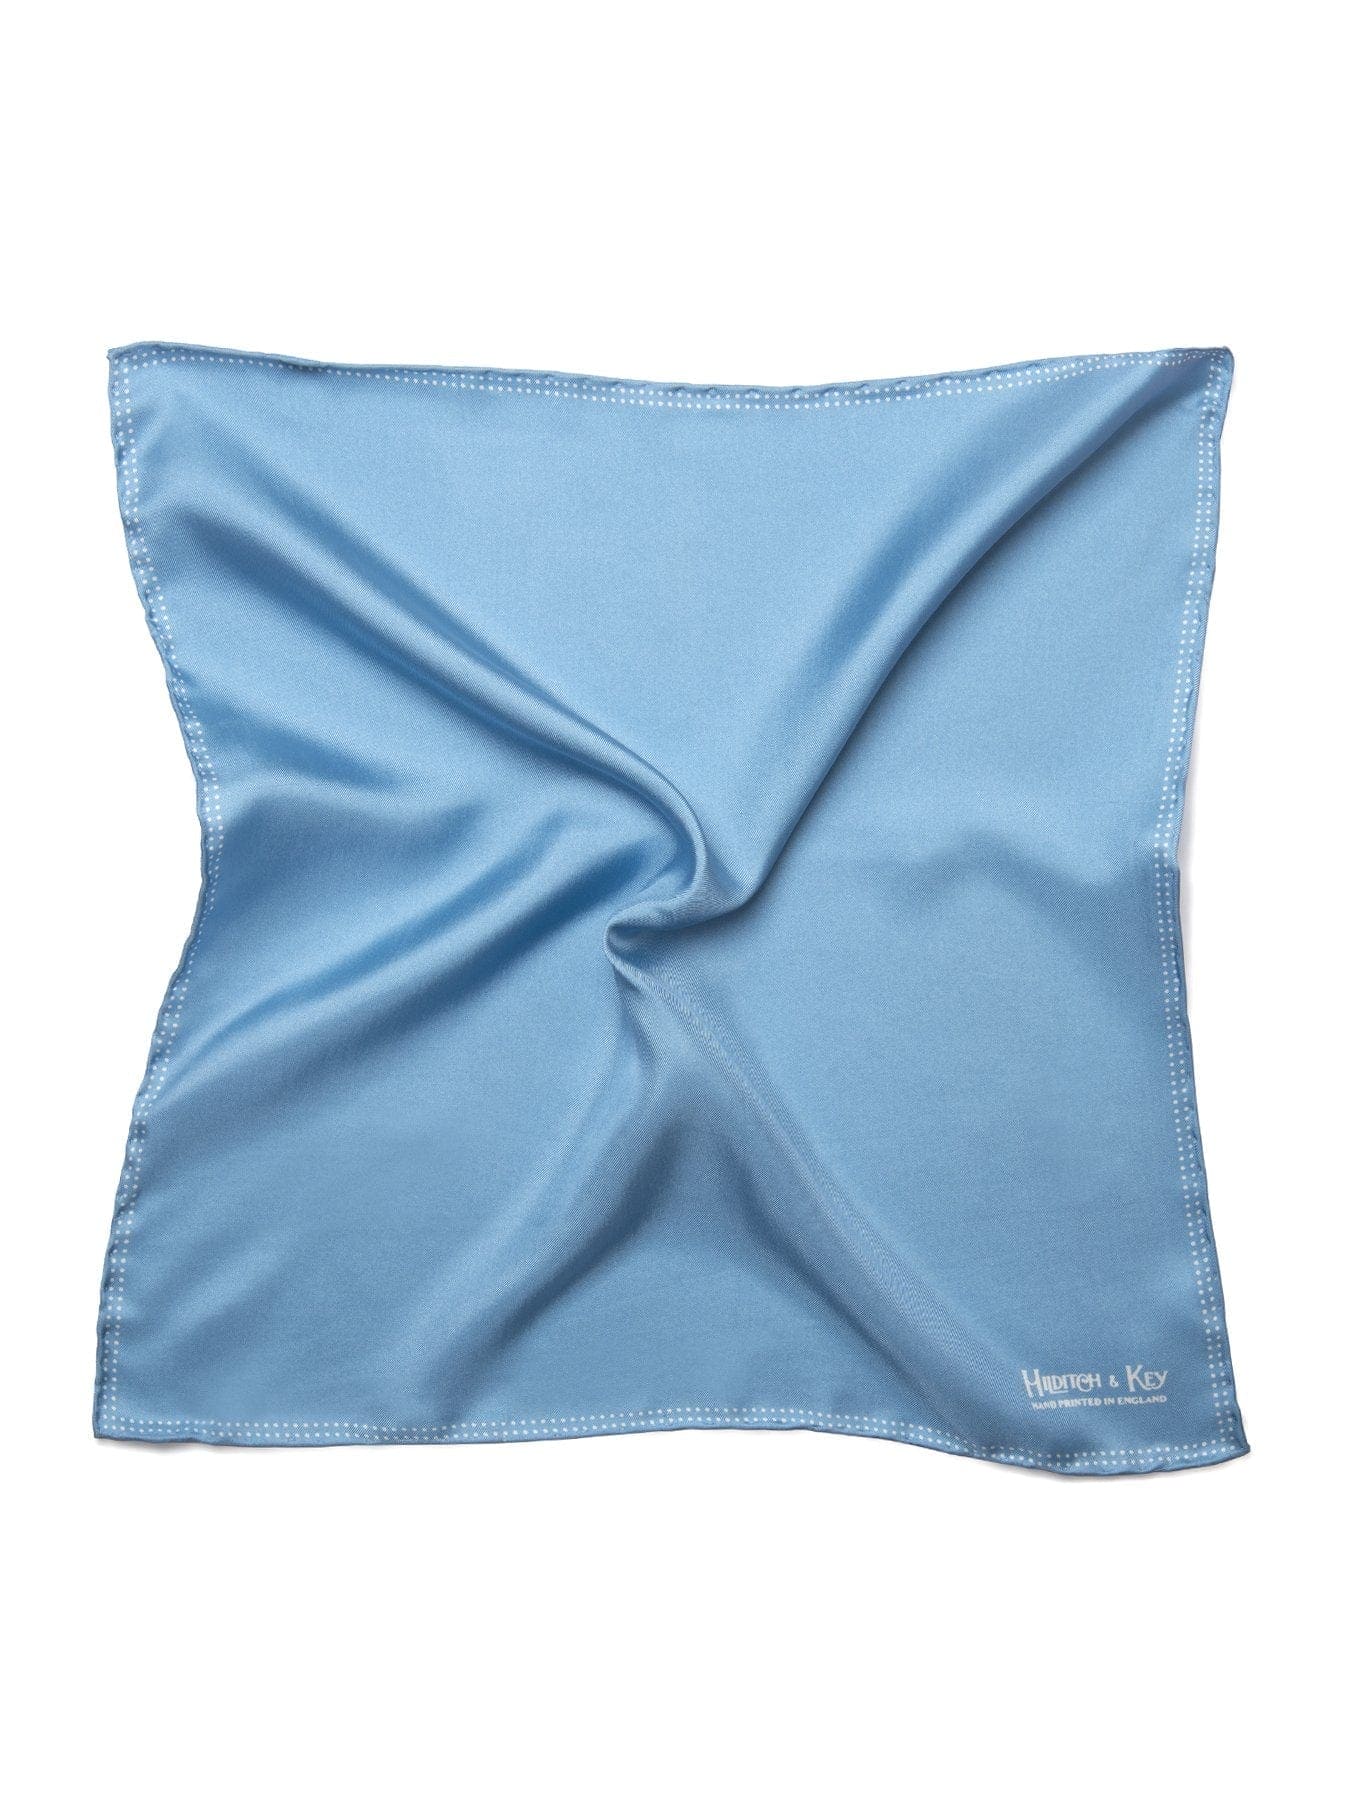 Sky Blue Silk Handkerchief with White Spots